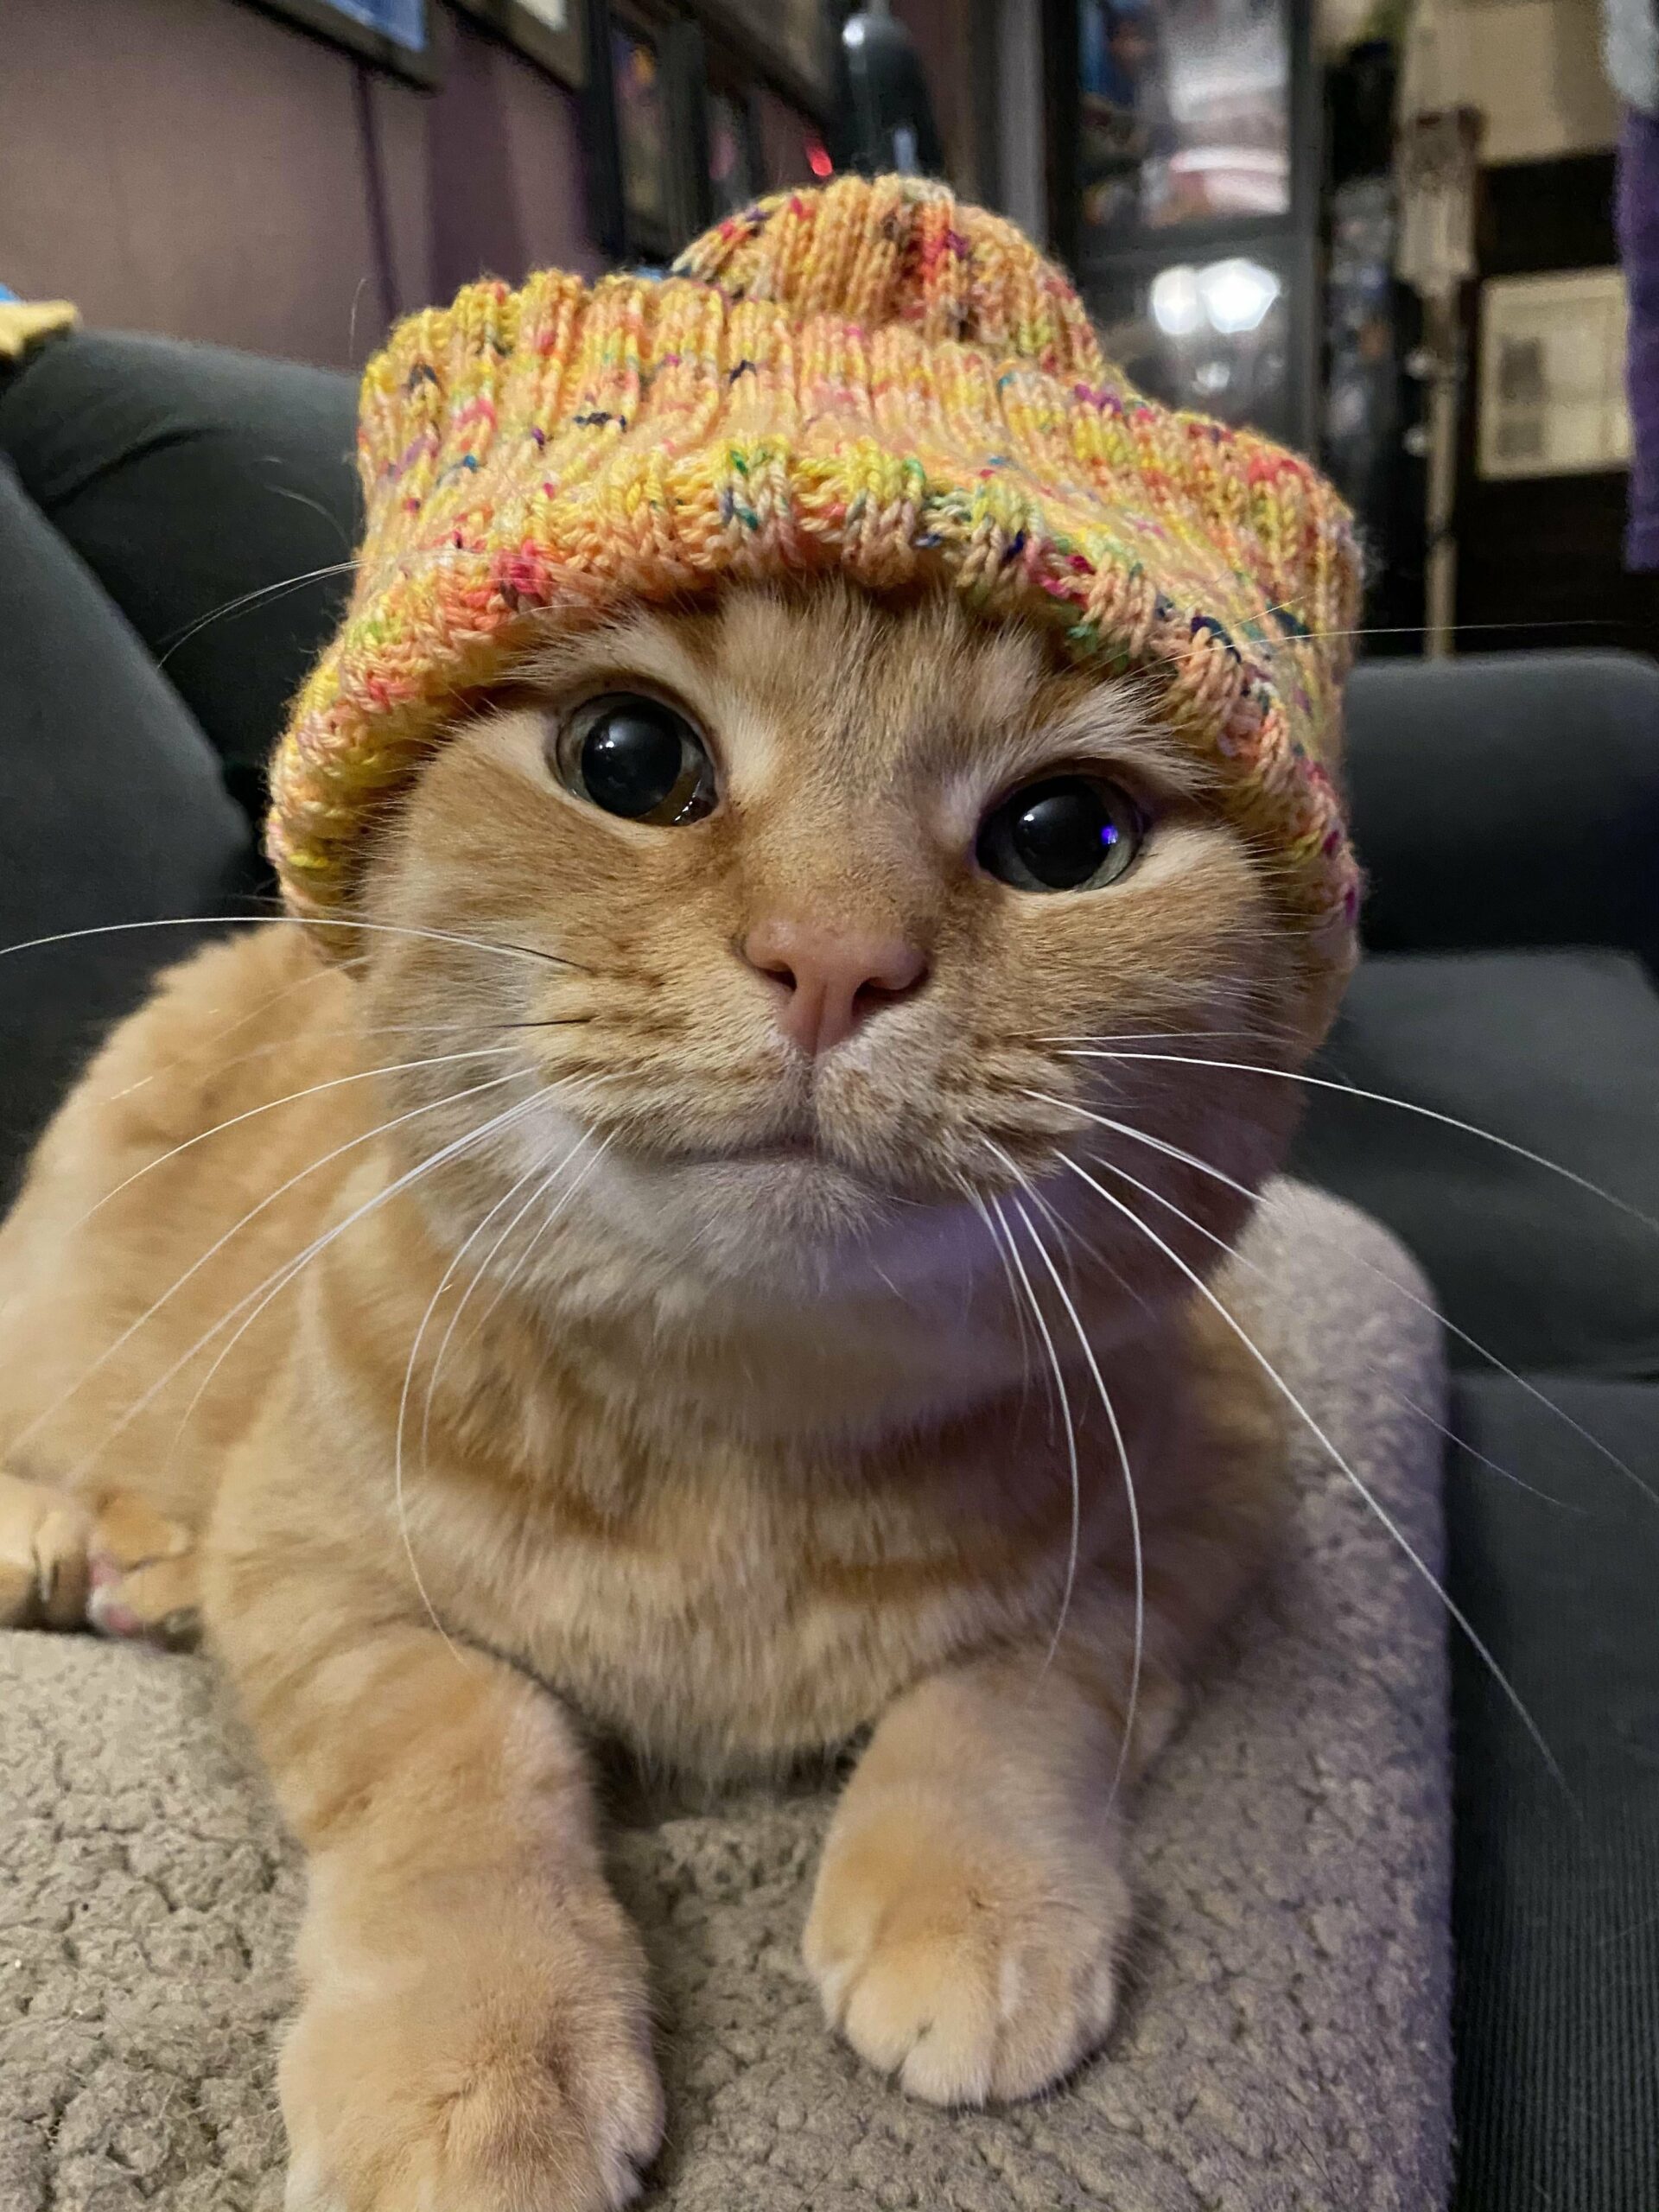 orange cat smiles while wearing a knit cap